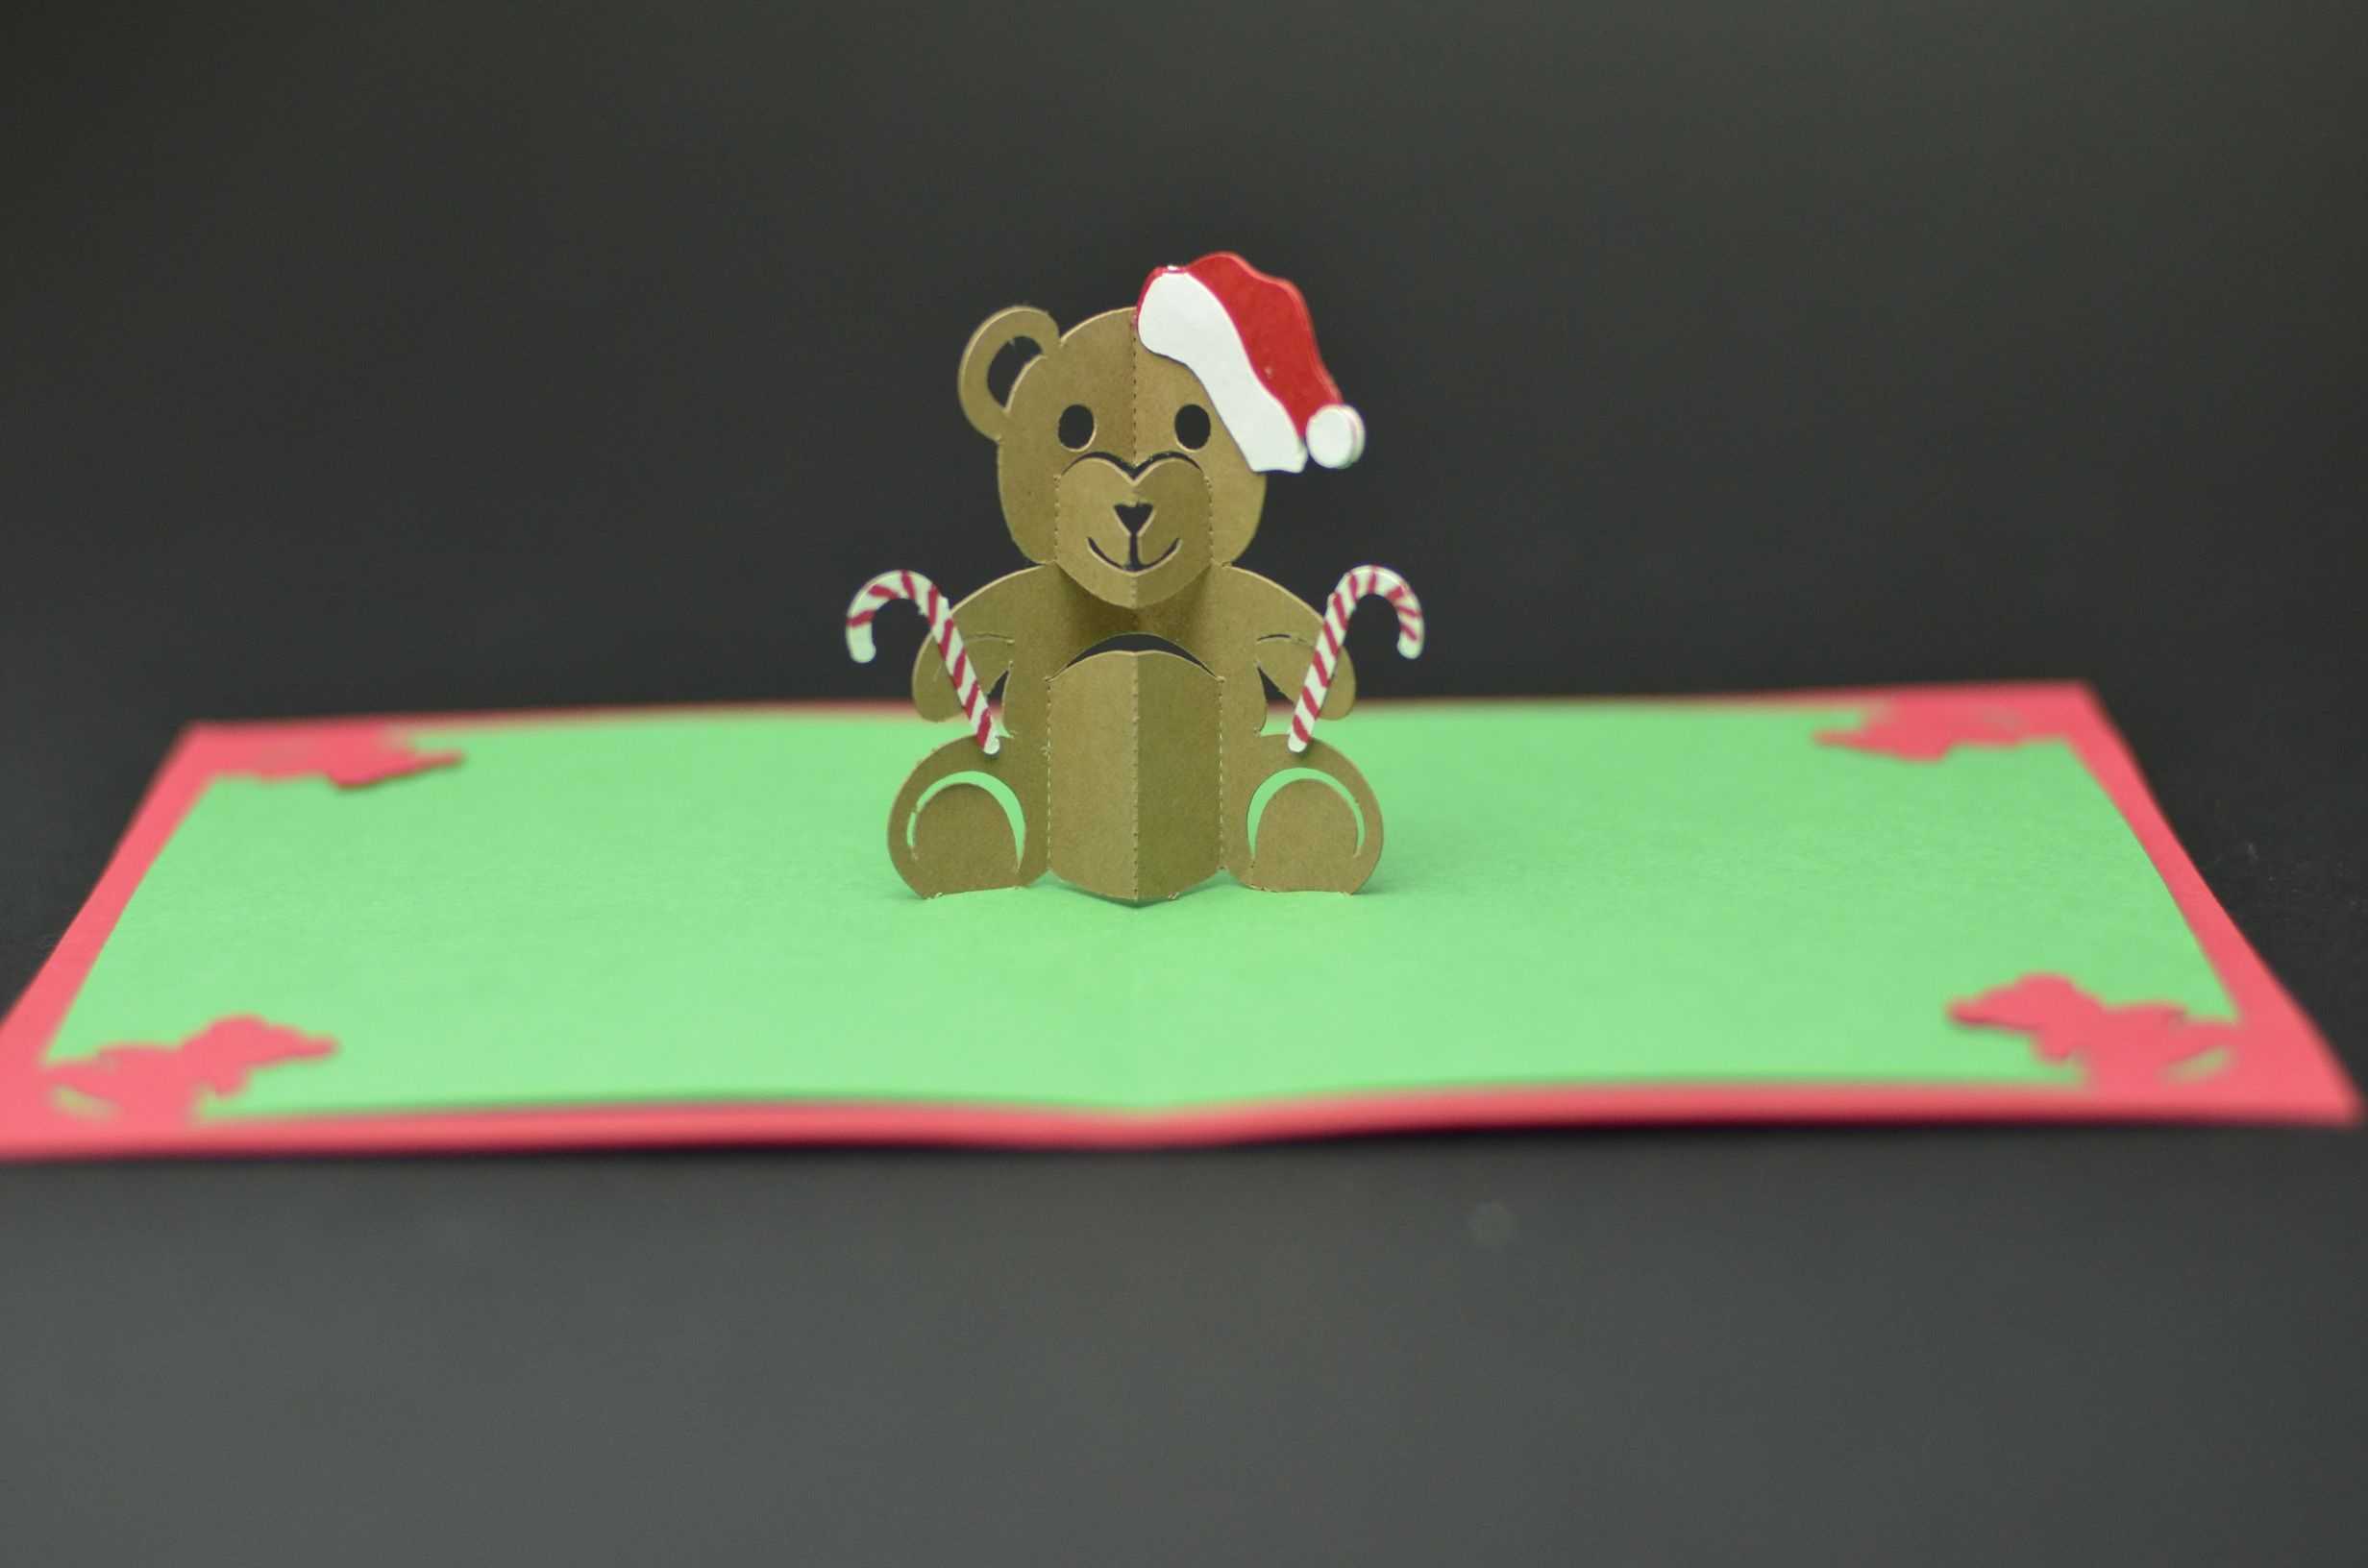 Teddy Bear Pop Up Card: Tutorial And Template | Tutorials Inside Teddy Bear Pop Up Card Template Free